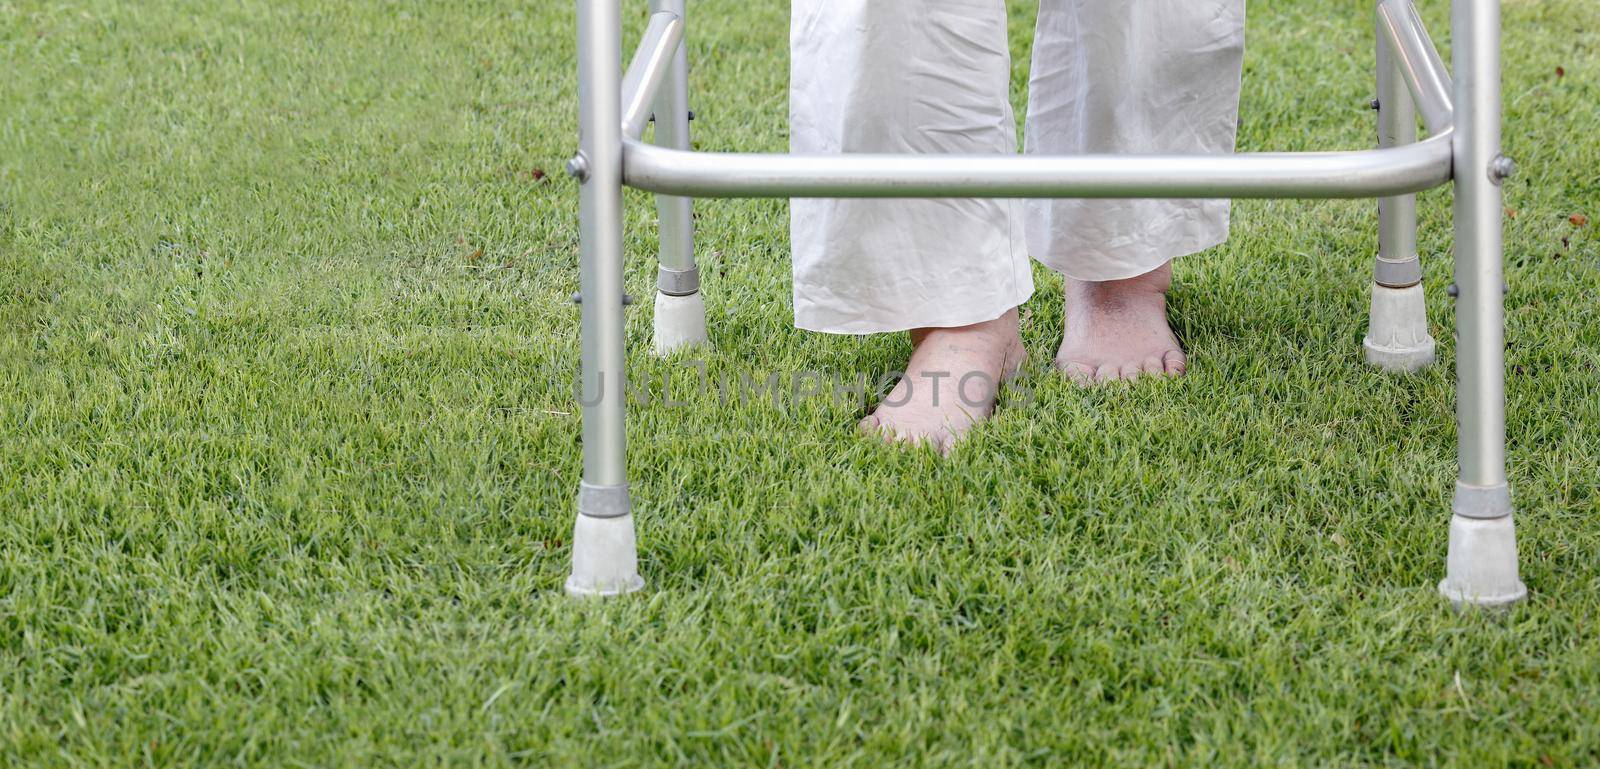 Elderly woman walking barefoot therapy on grass in backyard.